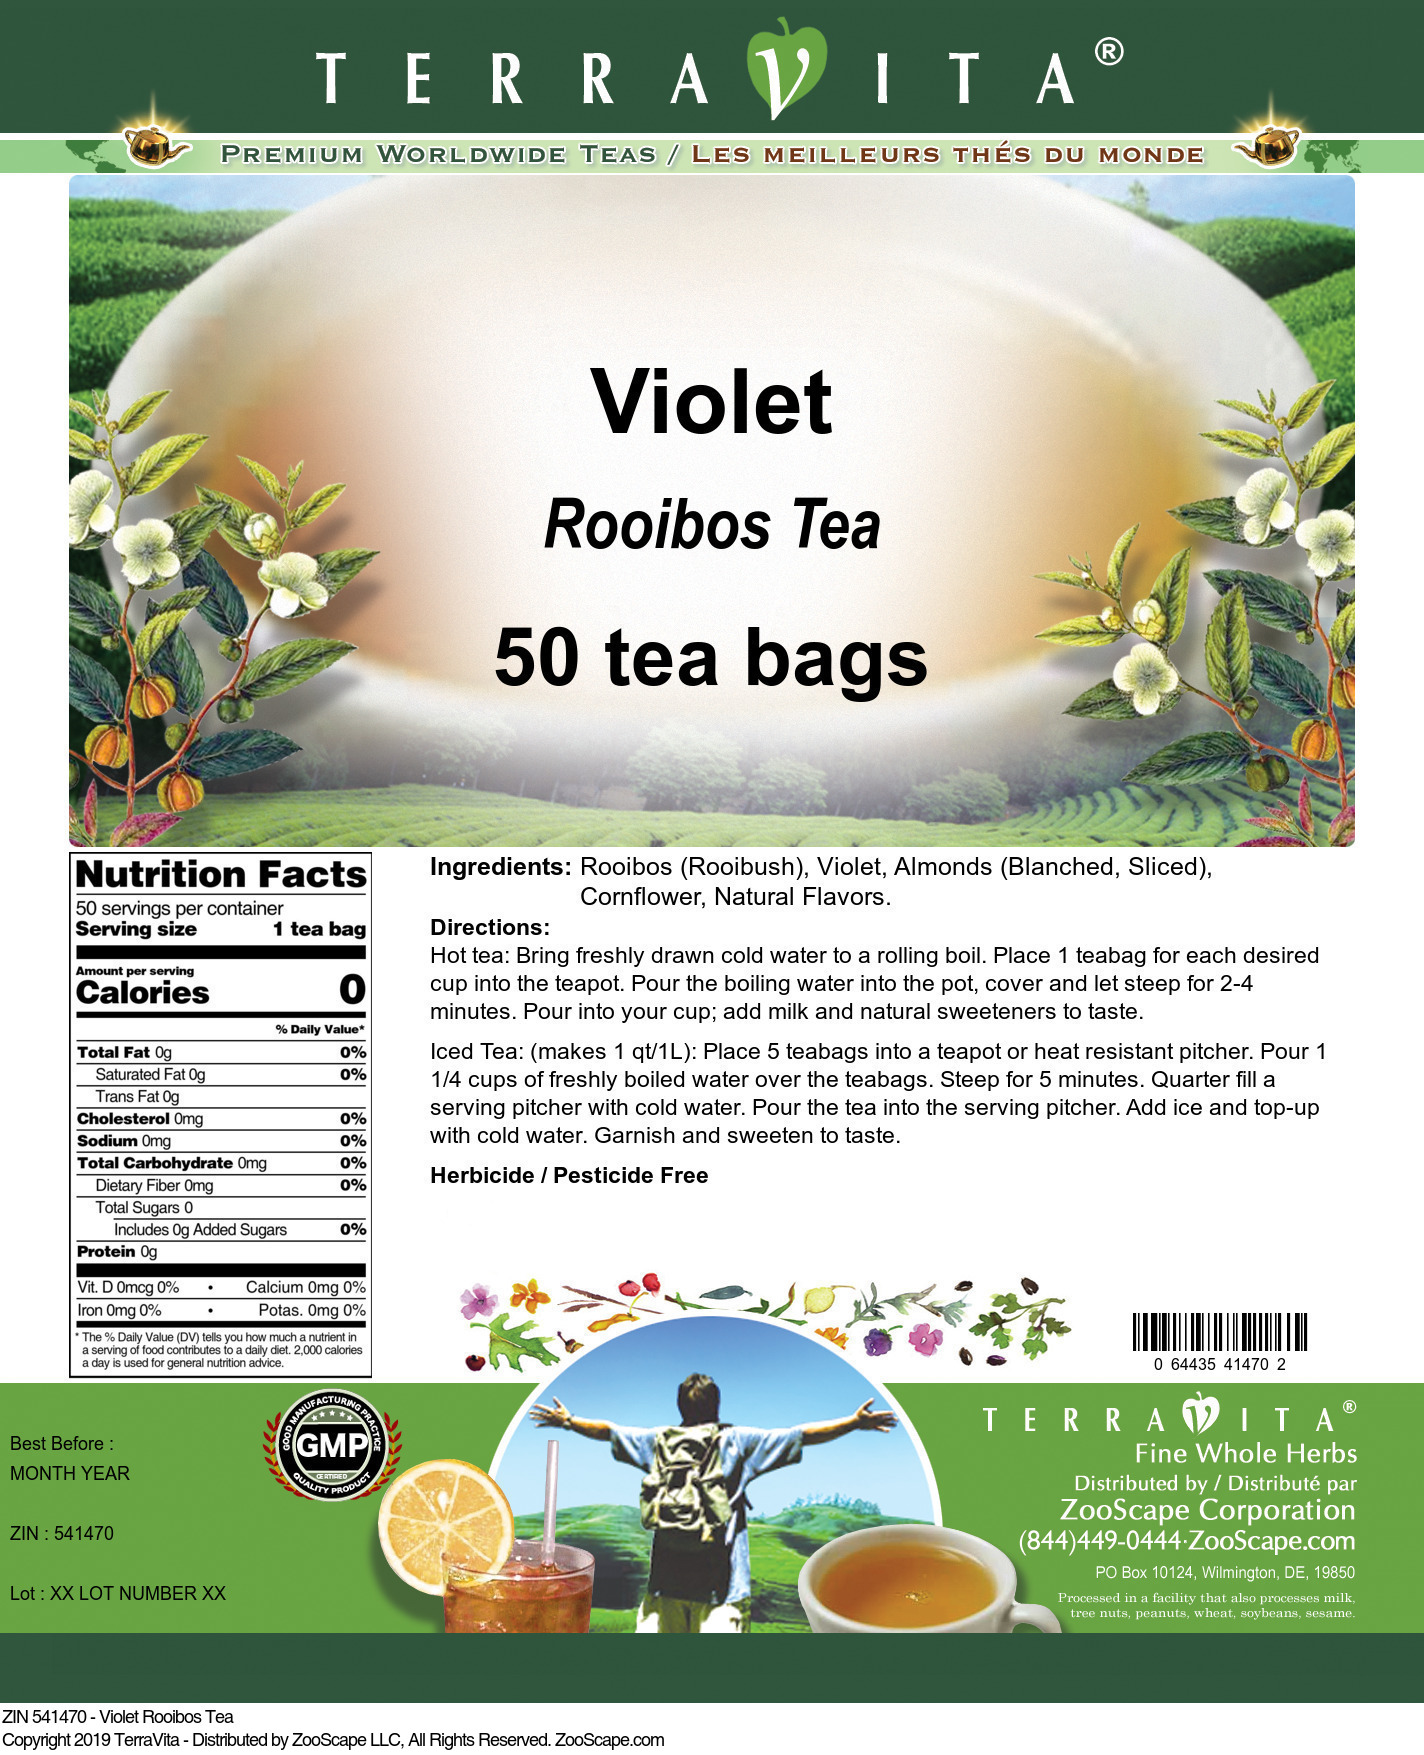 Violet Rooibos Tea - Label